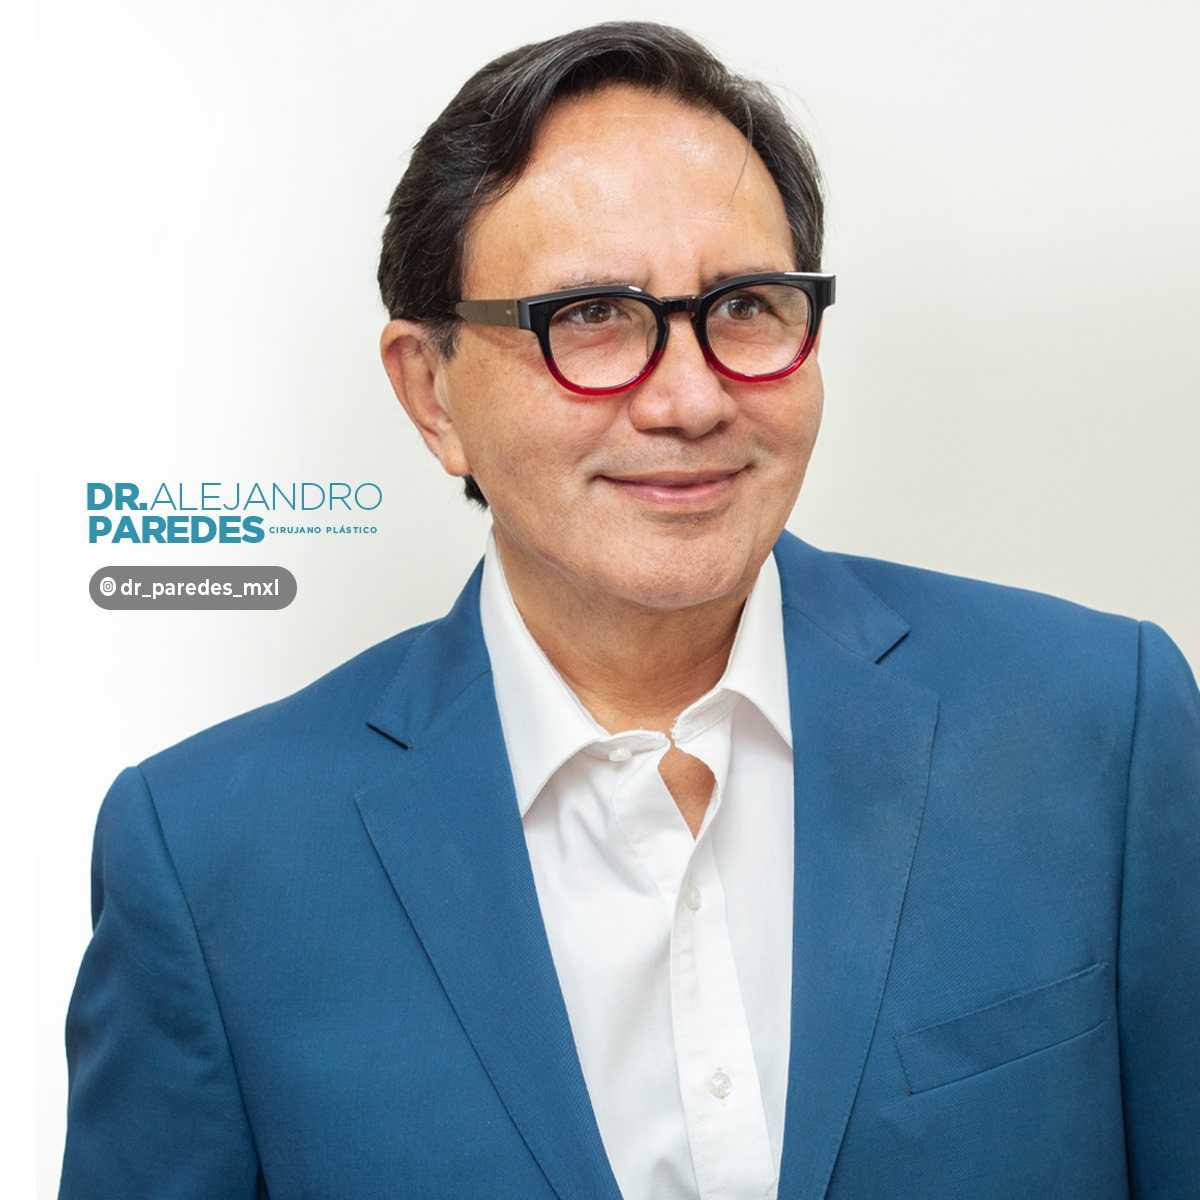 Dr. Alejandro Paredes